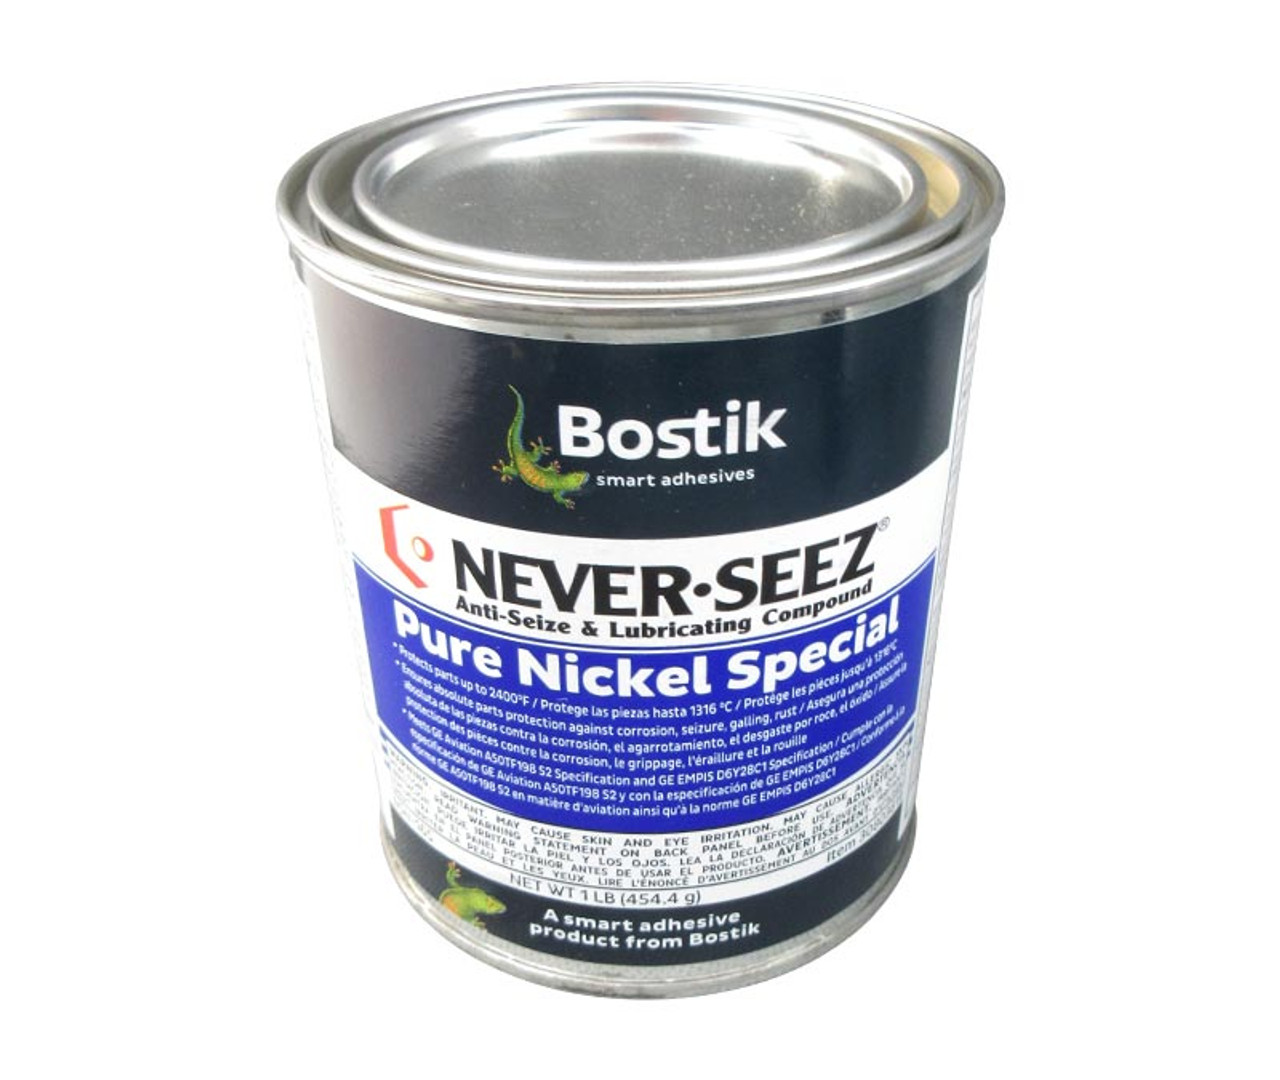 Bostik NSN-165 Never-Seez Pure Nickle Anti-Seize Compound - 1 lb